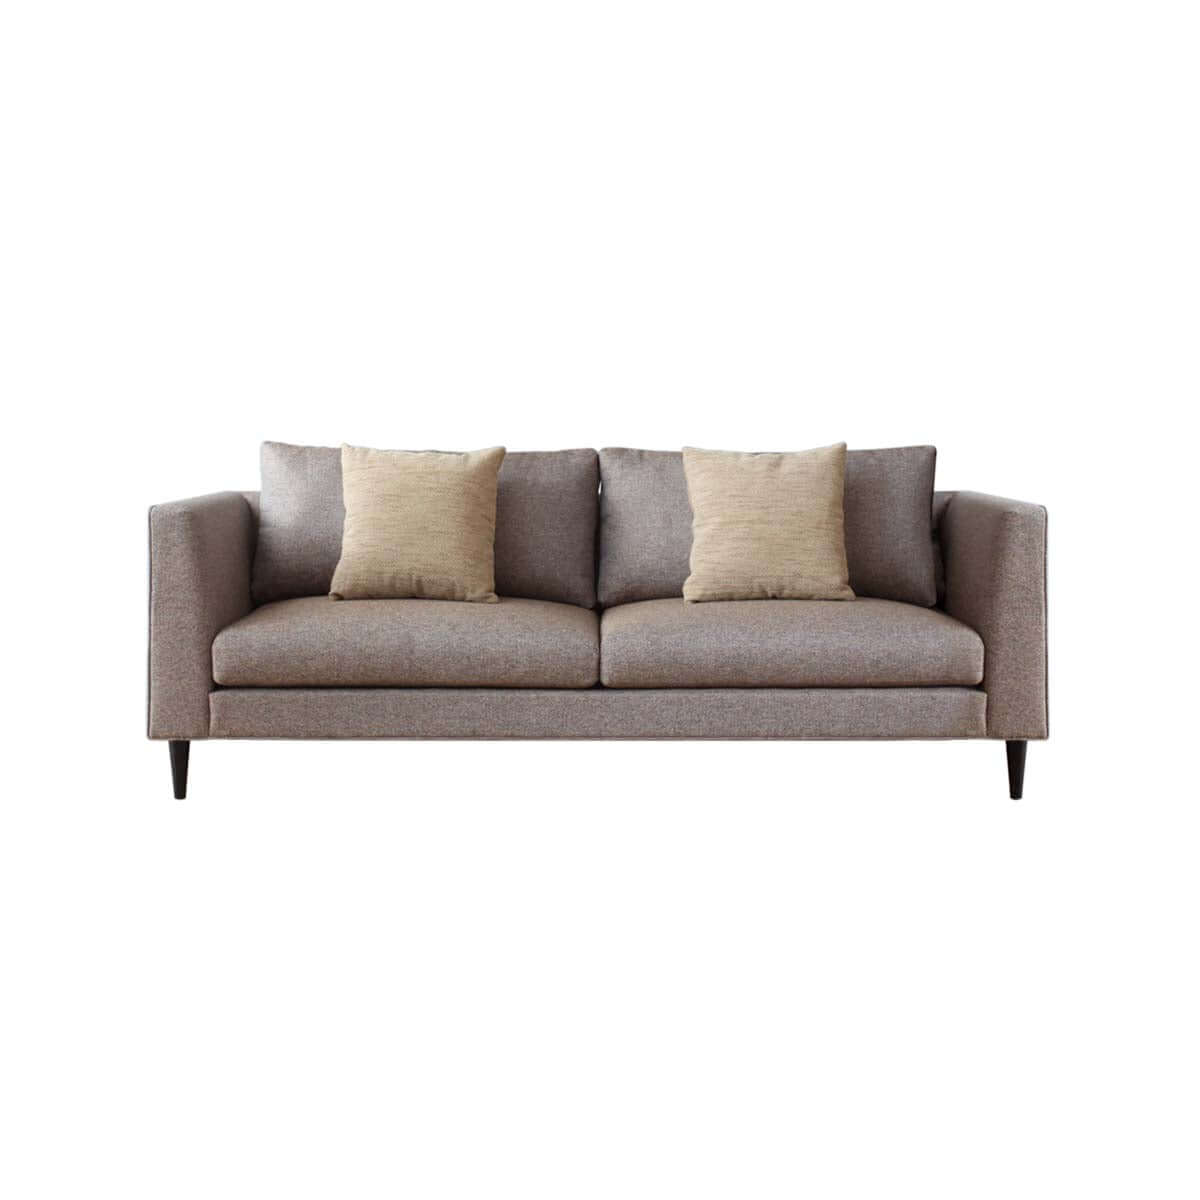 Slimline 3-seat sofa, simple and chic sofa